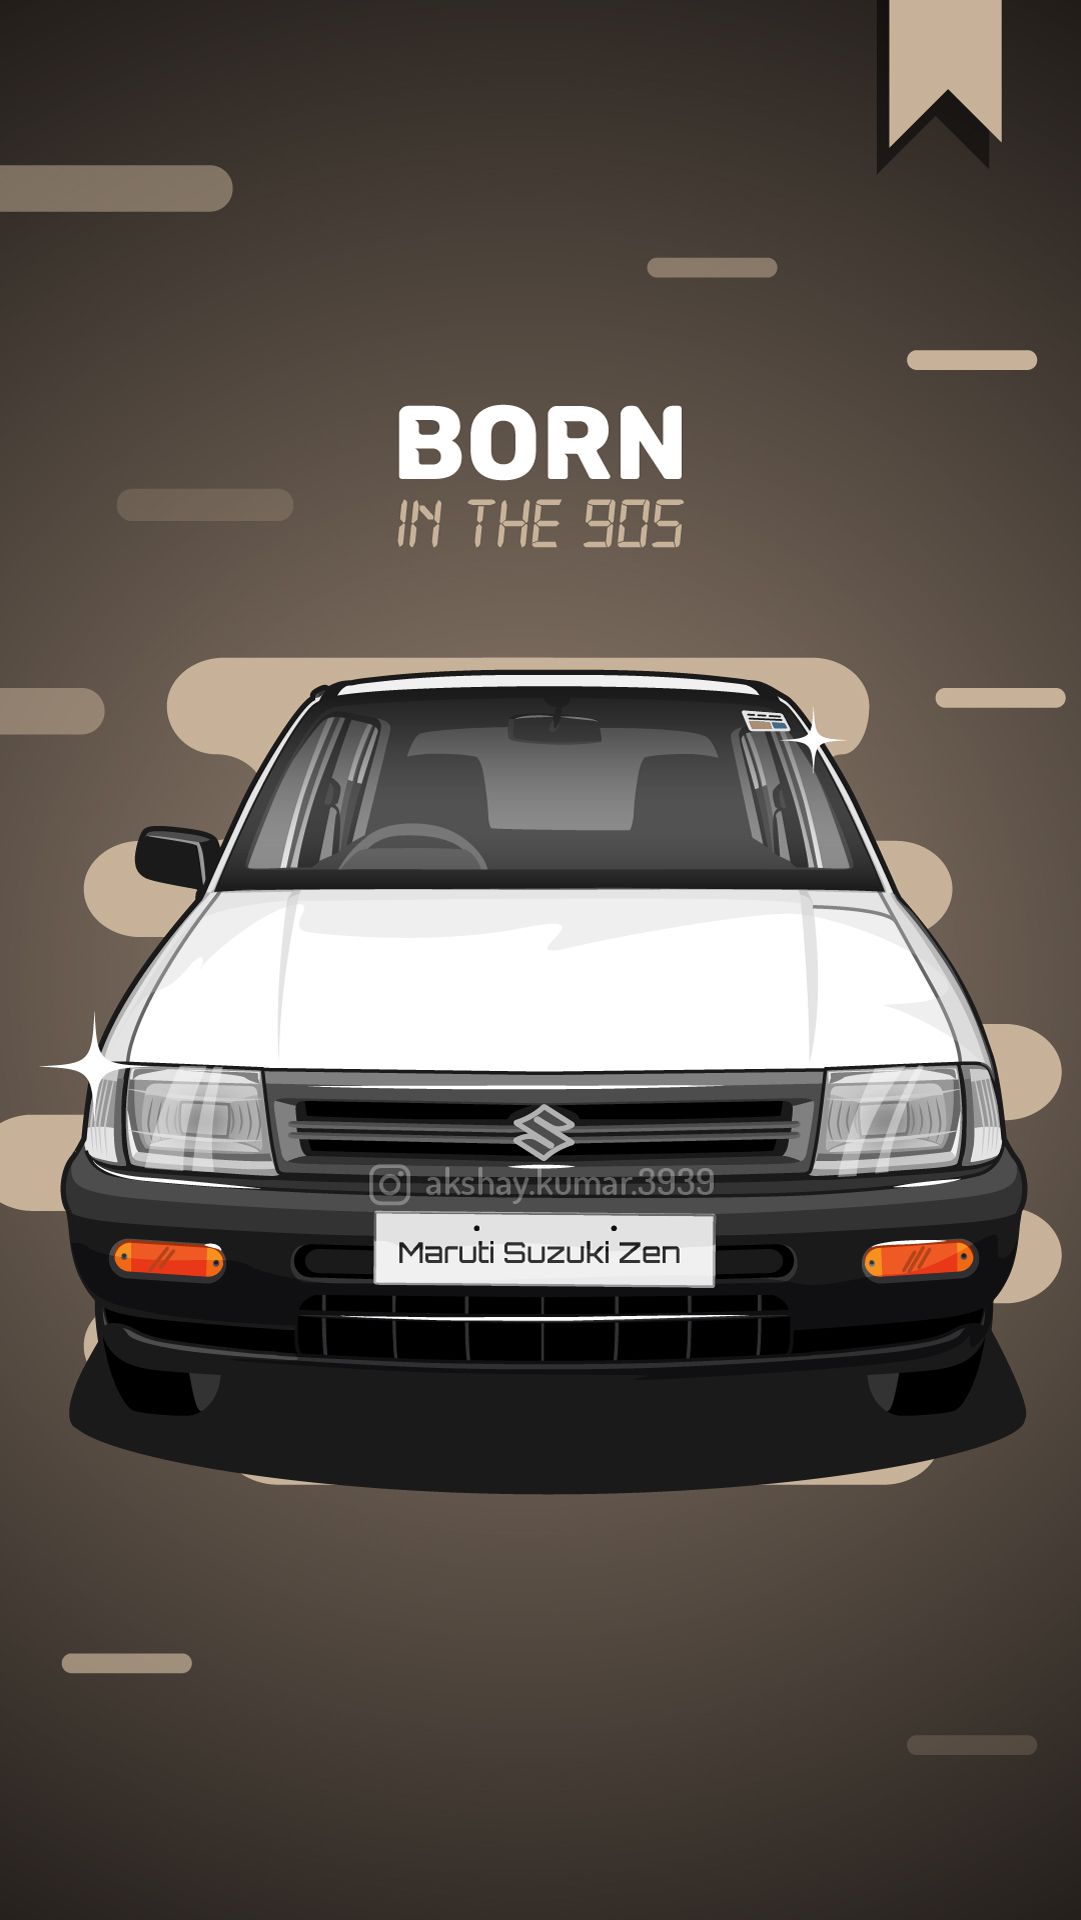 Maruti Suzuki Zen Wallpaper Indian Cars Vector Art